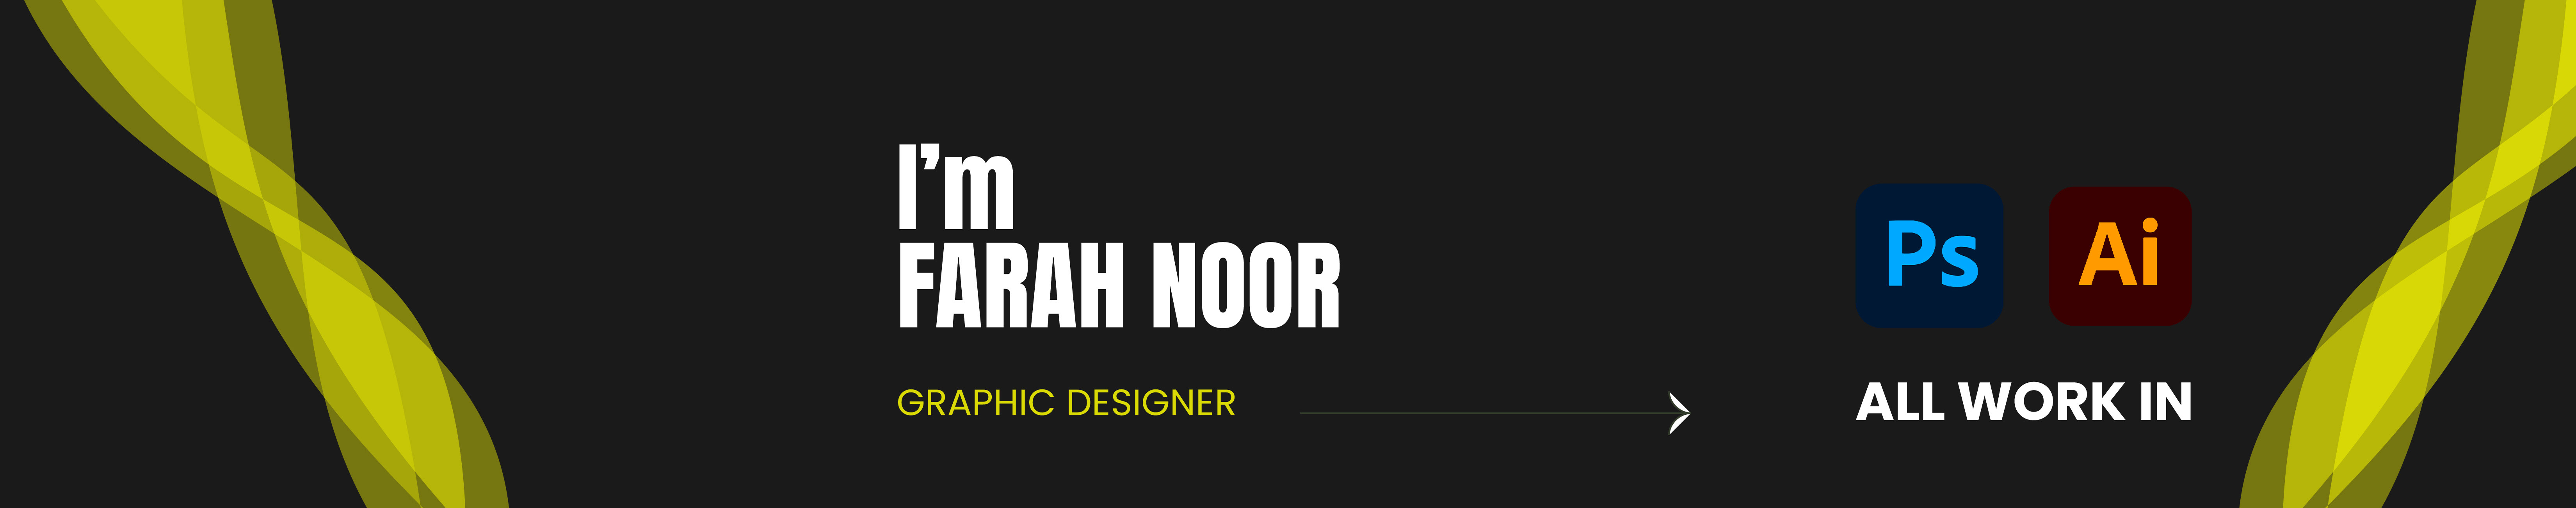 Banner de perfil de Farah Noor